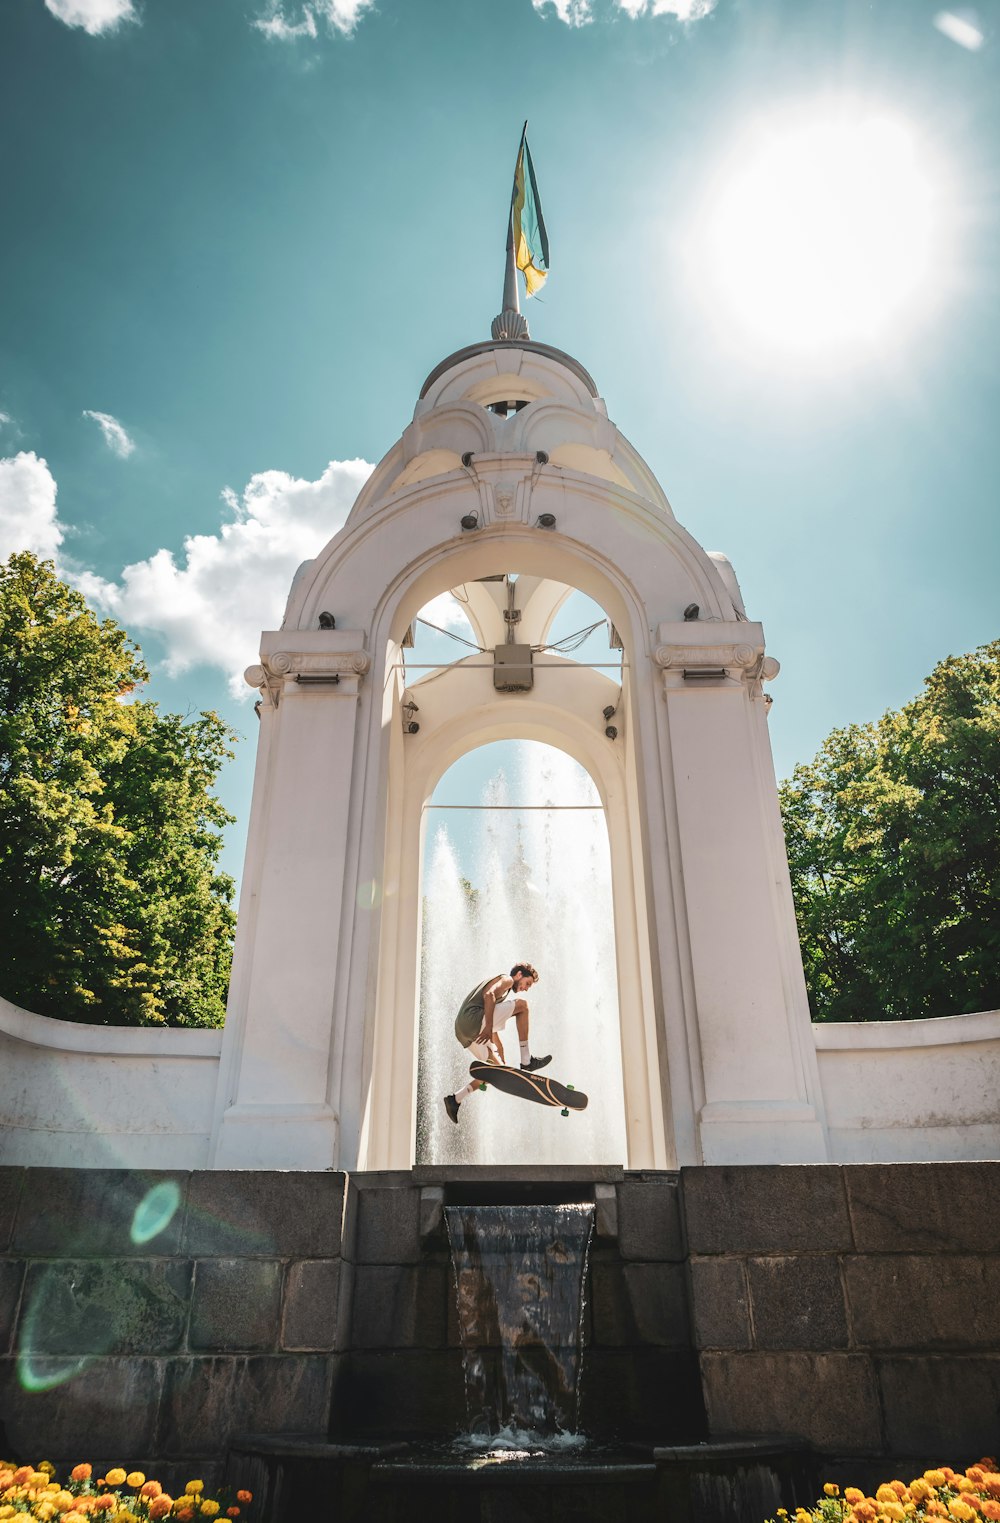 man doing longboard tricks under the arch near fountain